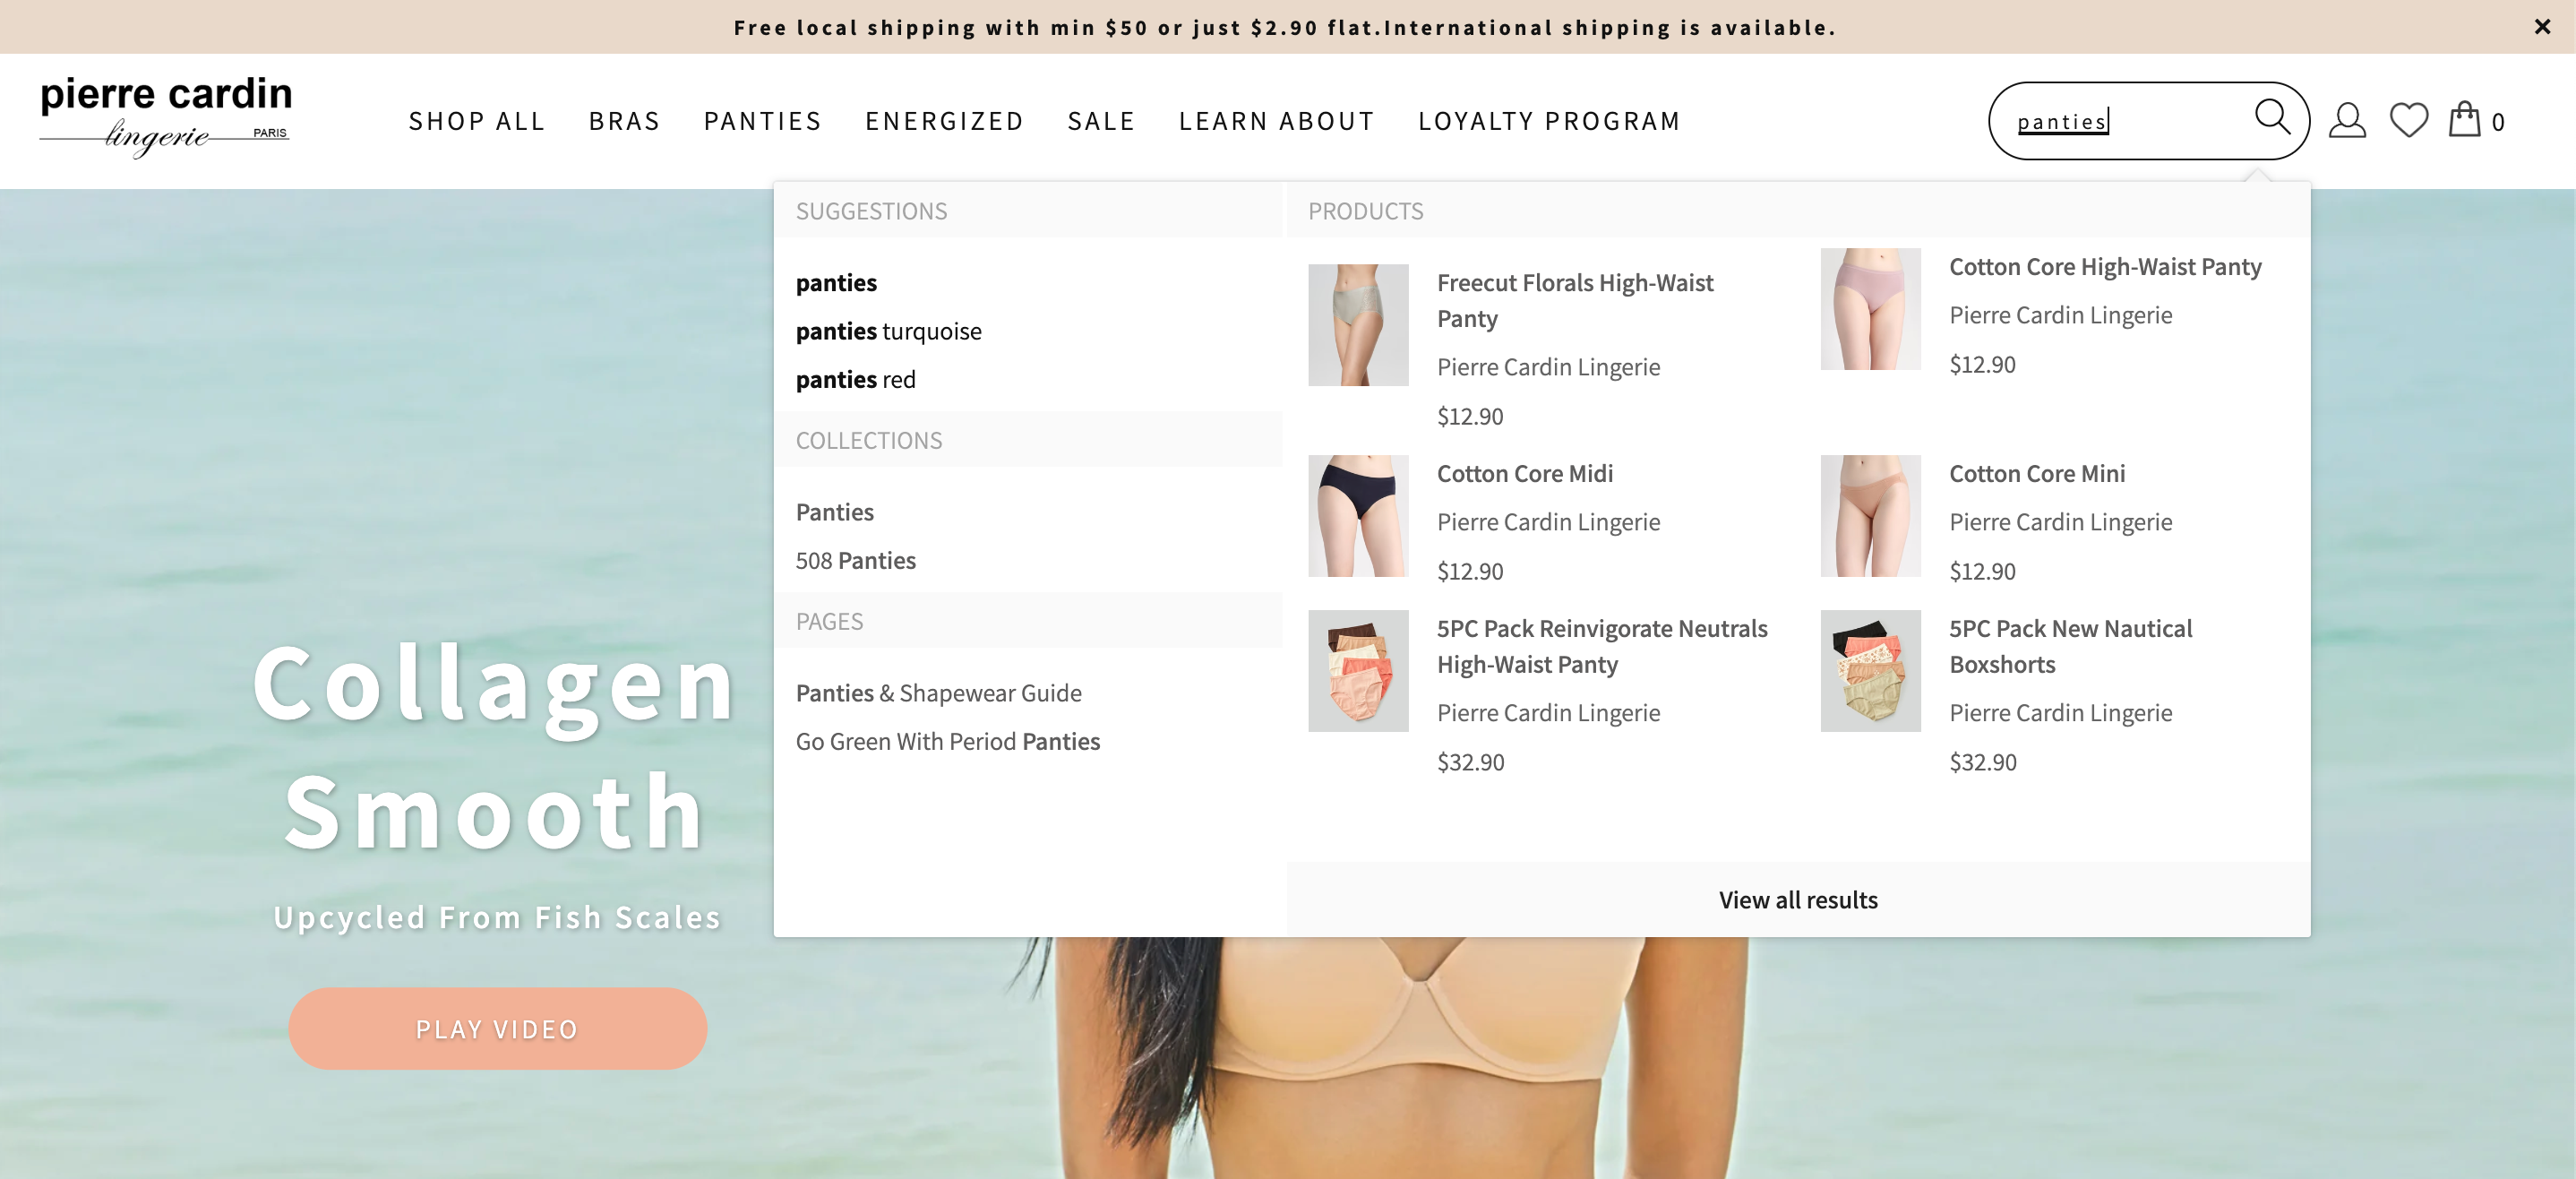 pierre cardin lingerie store instant search dropdown using boost